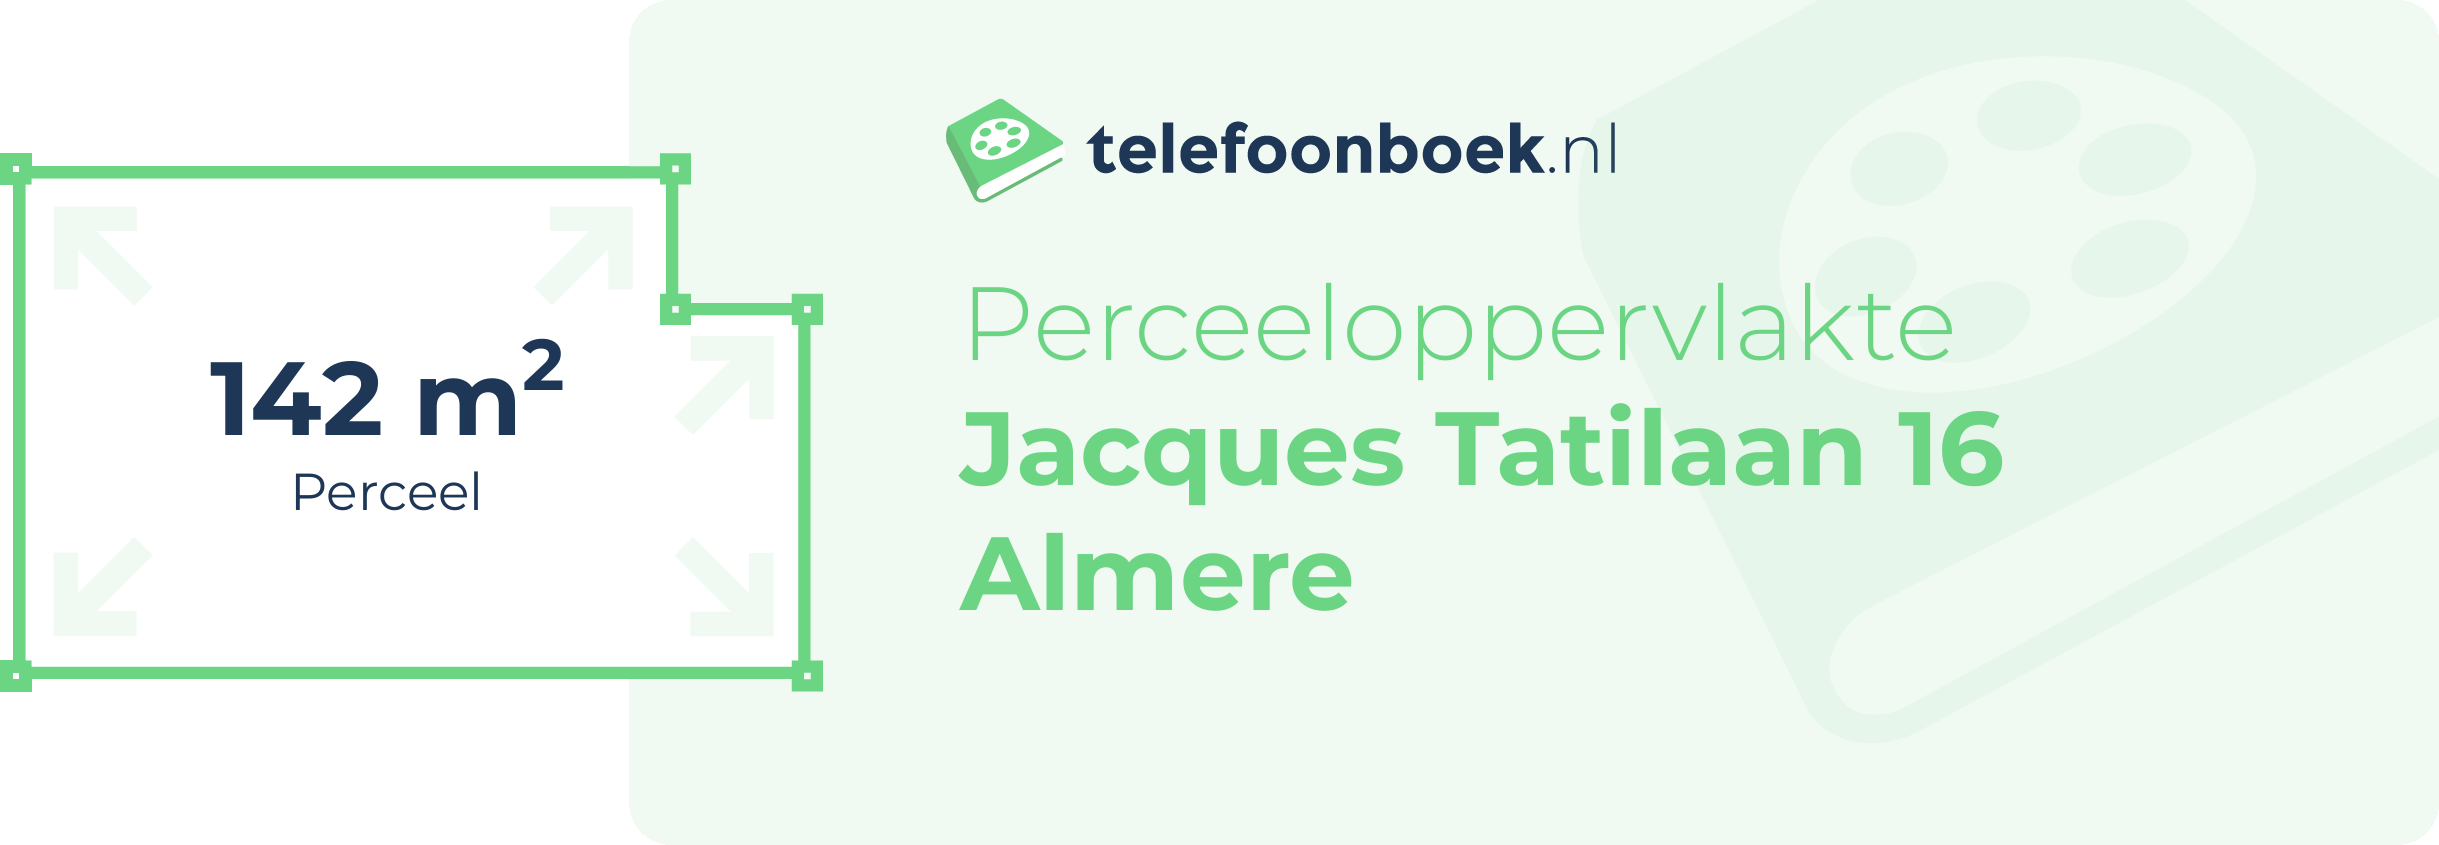 Perceeloppervlakte Jacques Tatilaan 16 Almere